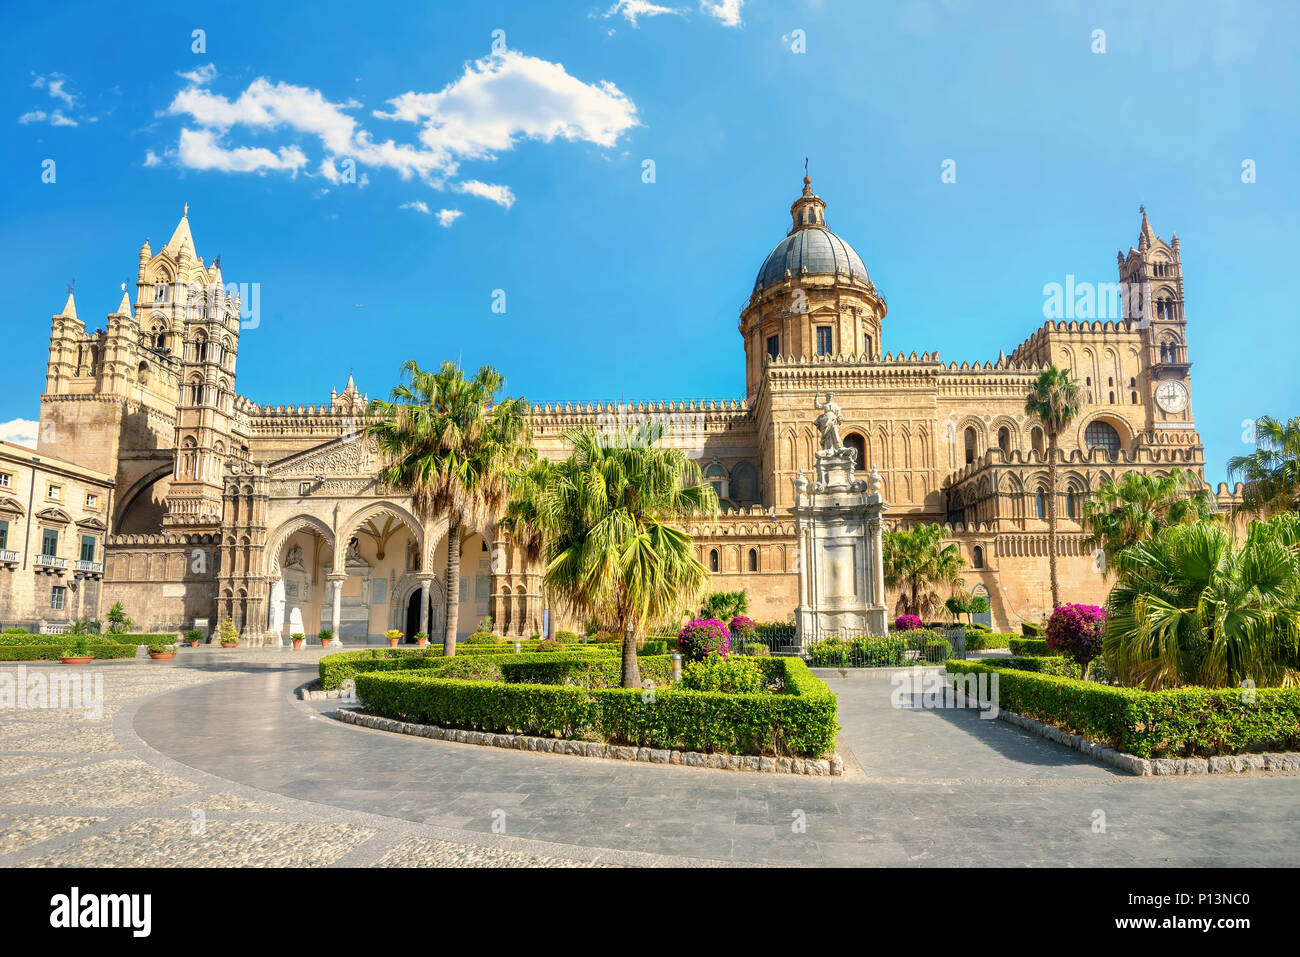 View of Palermo Cathedral (Duomo di Palermo). Palermo, Sicily, Italy Stock Photo